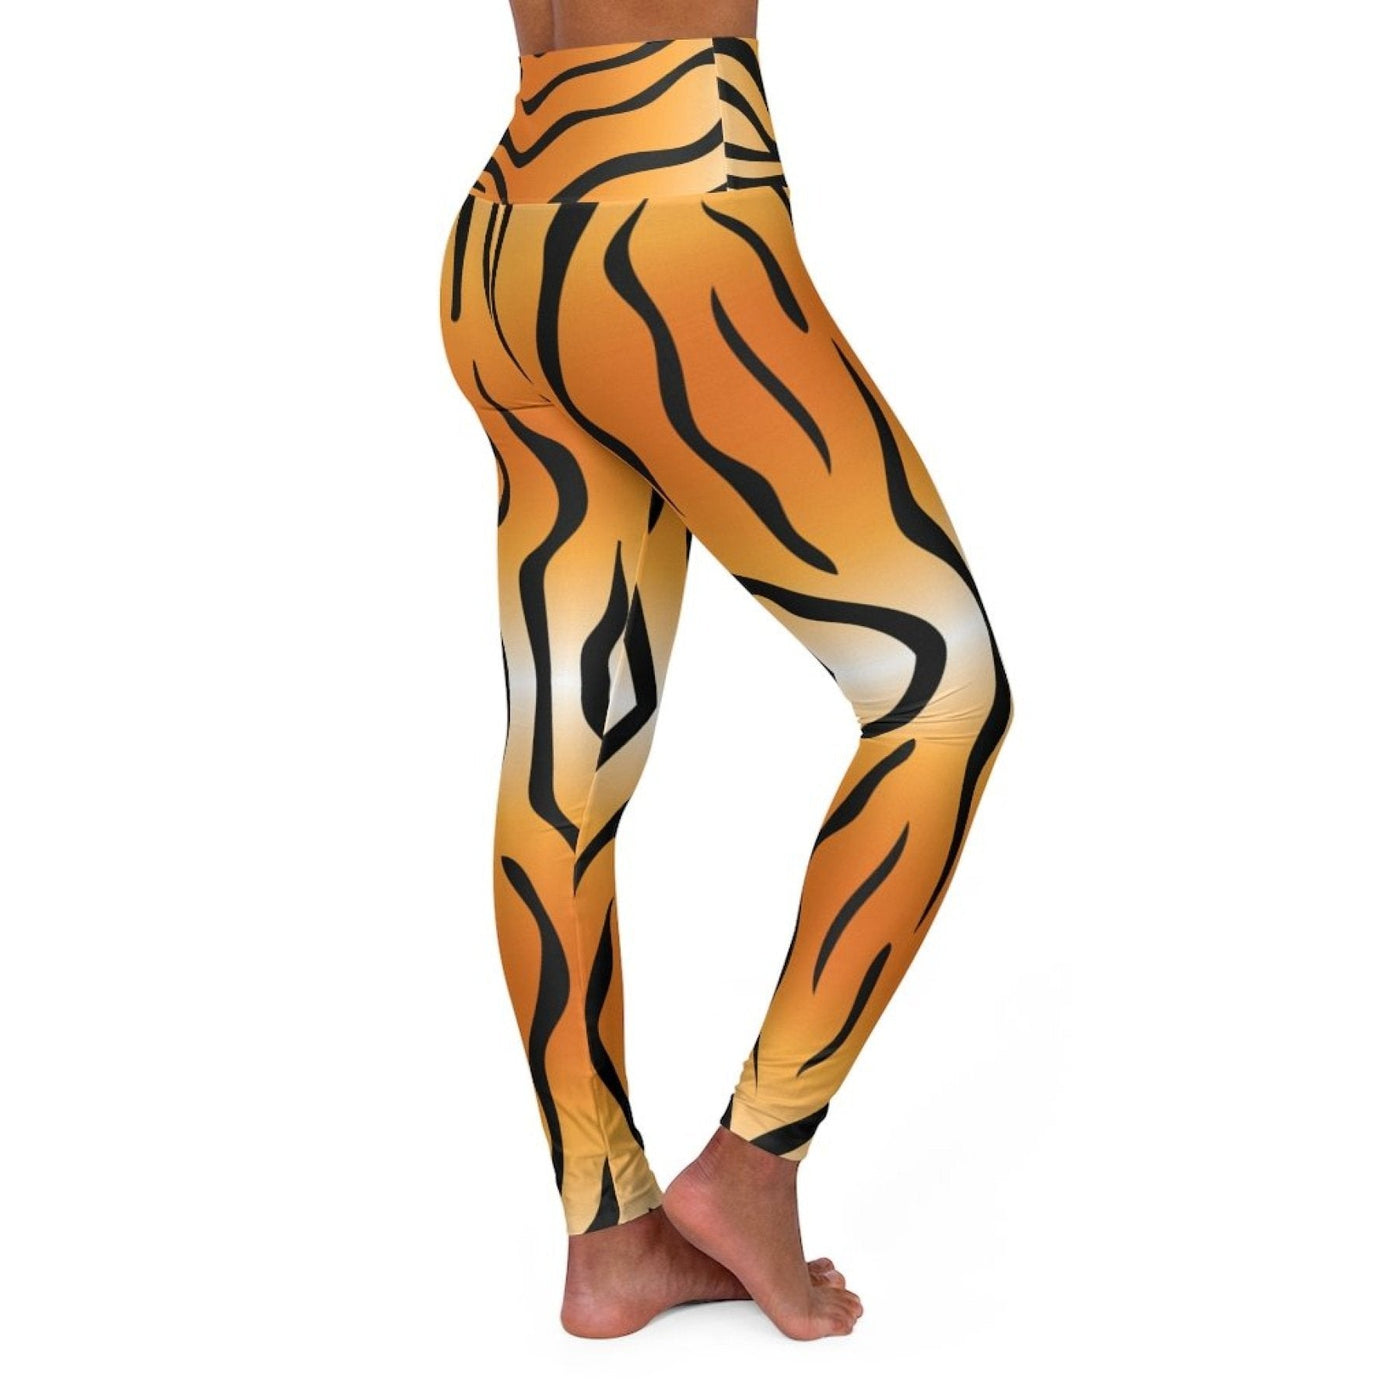 Womens High - waist Fitness Legging Yoga Pants Tiger Stripes - Womens | Leggings